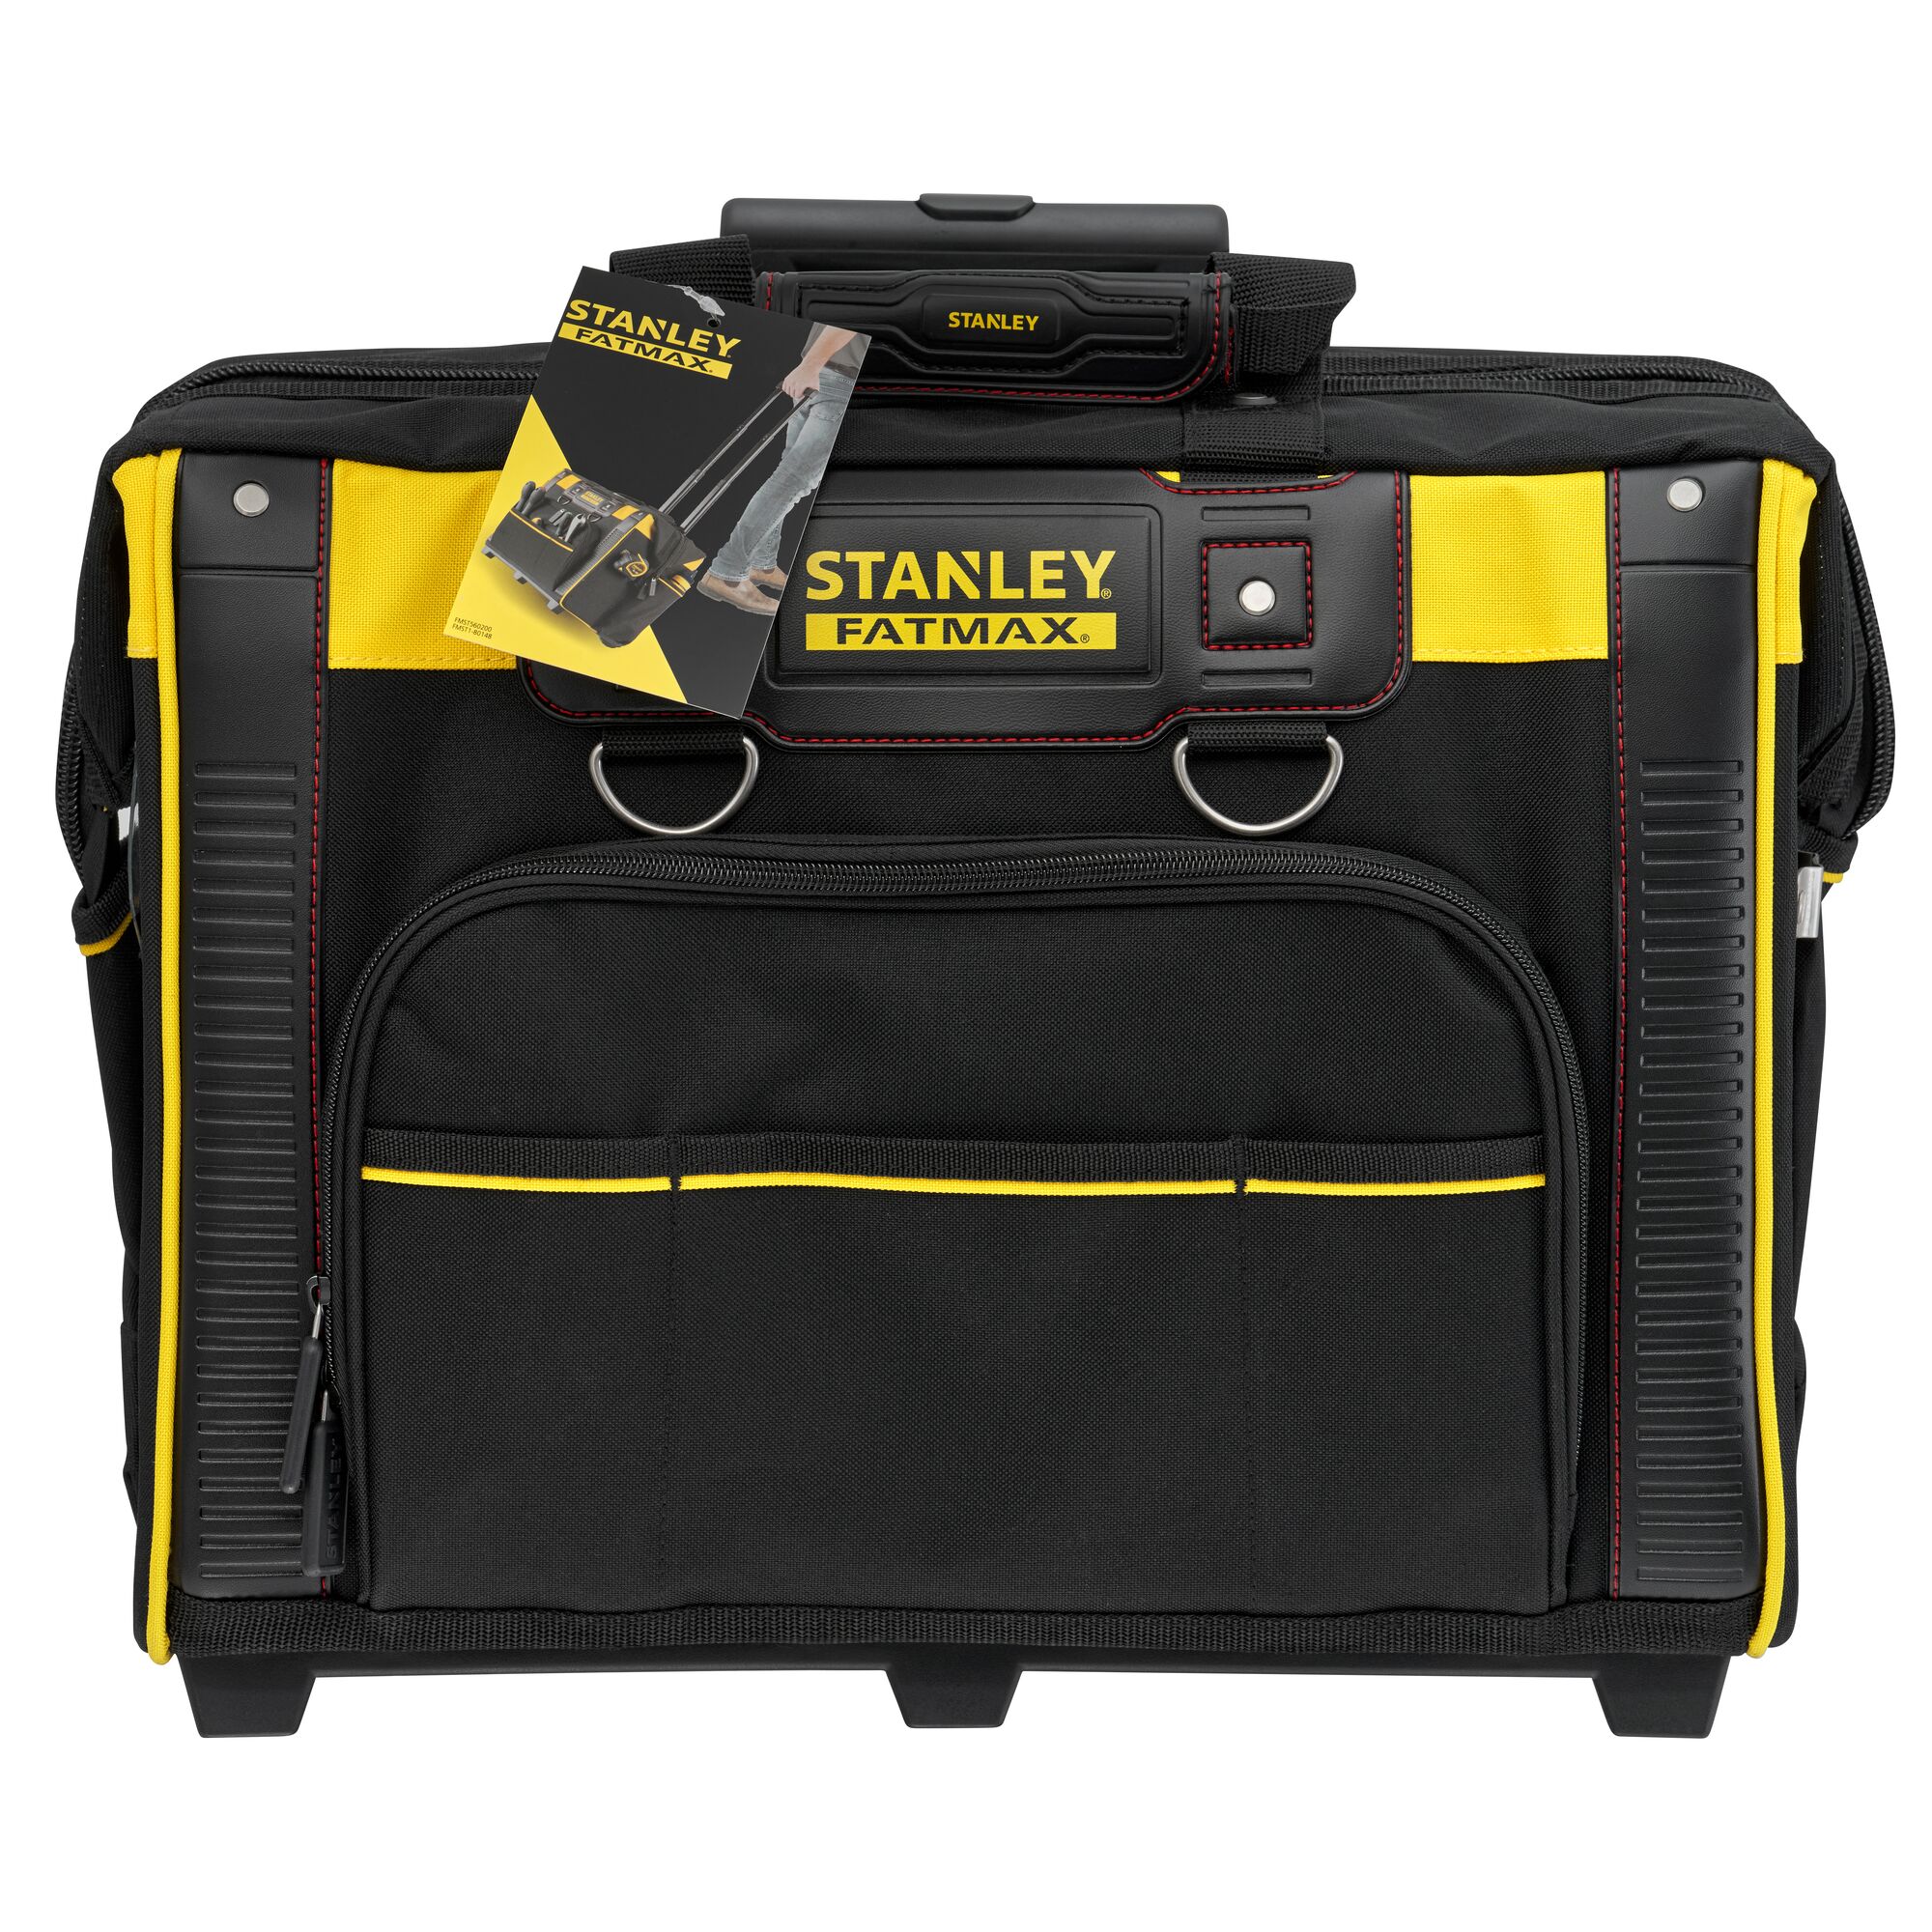 Stanley FatMax Bag on Wheels FMST180148 for sale online 